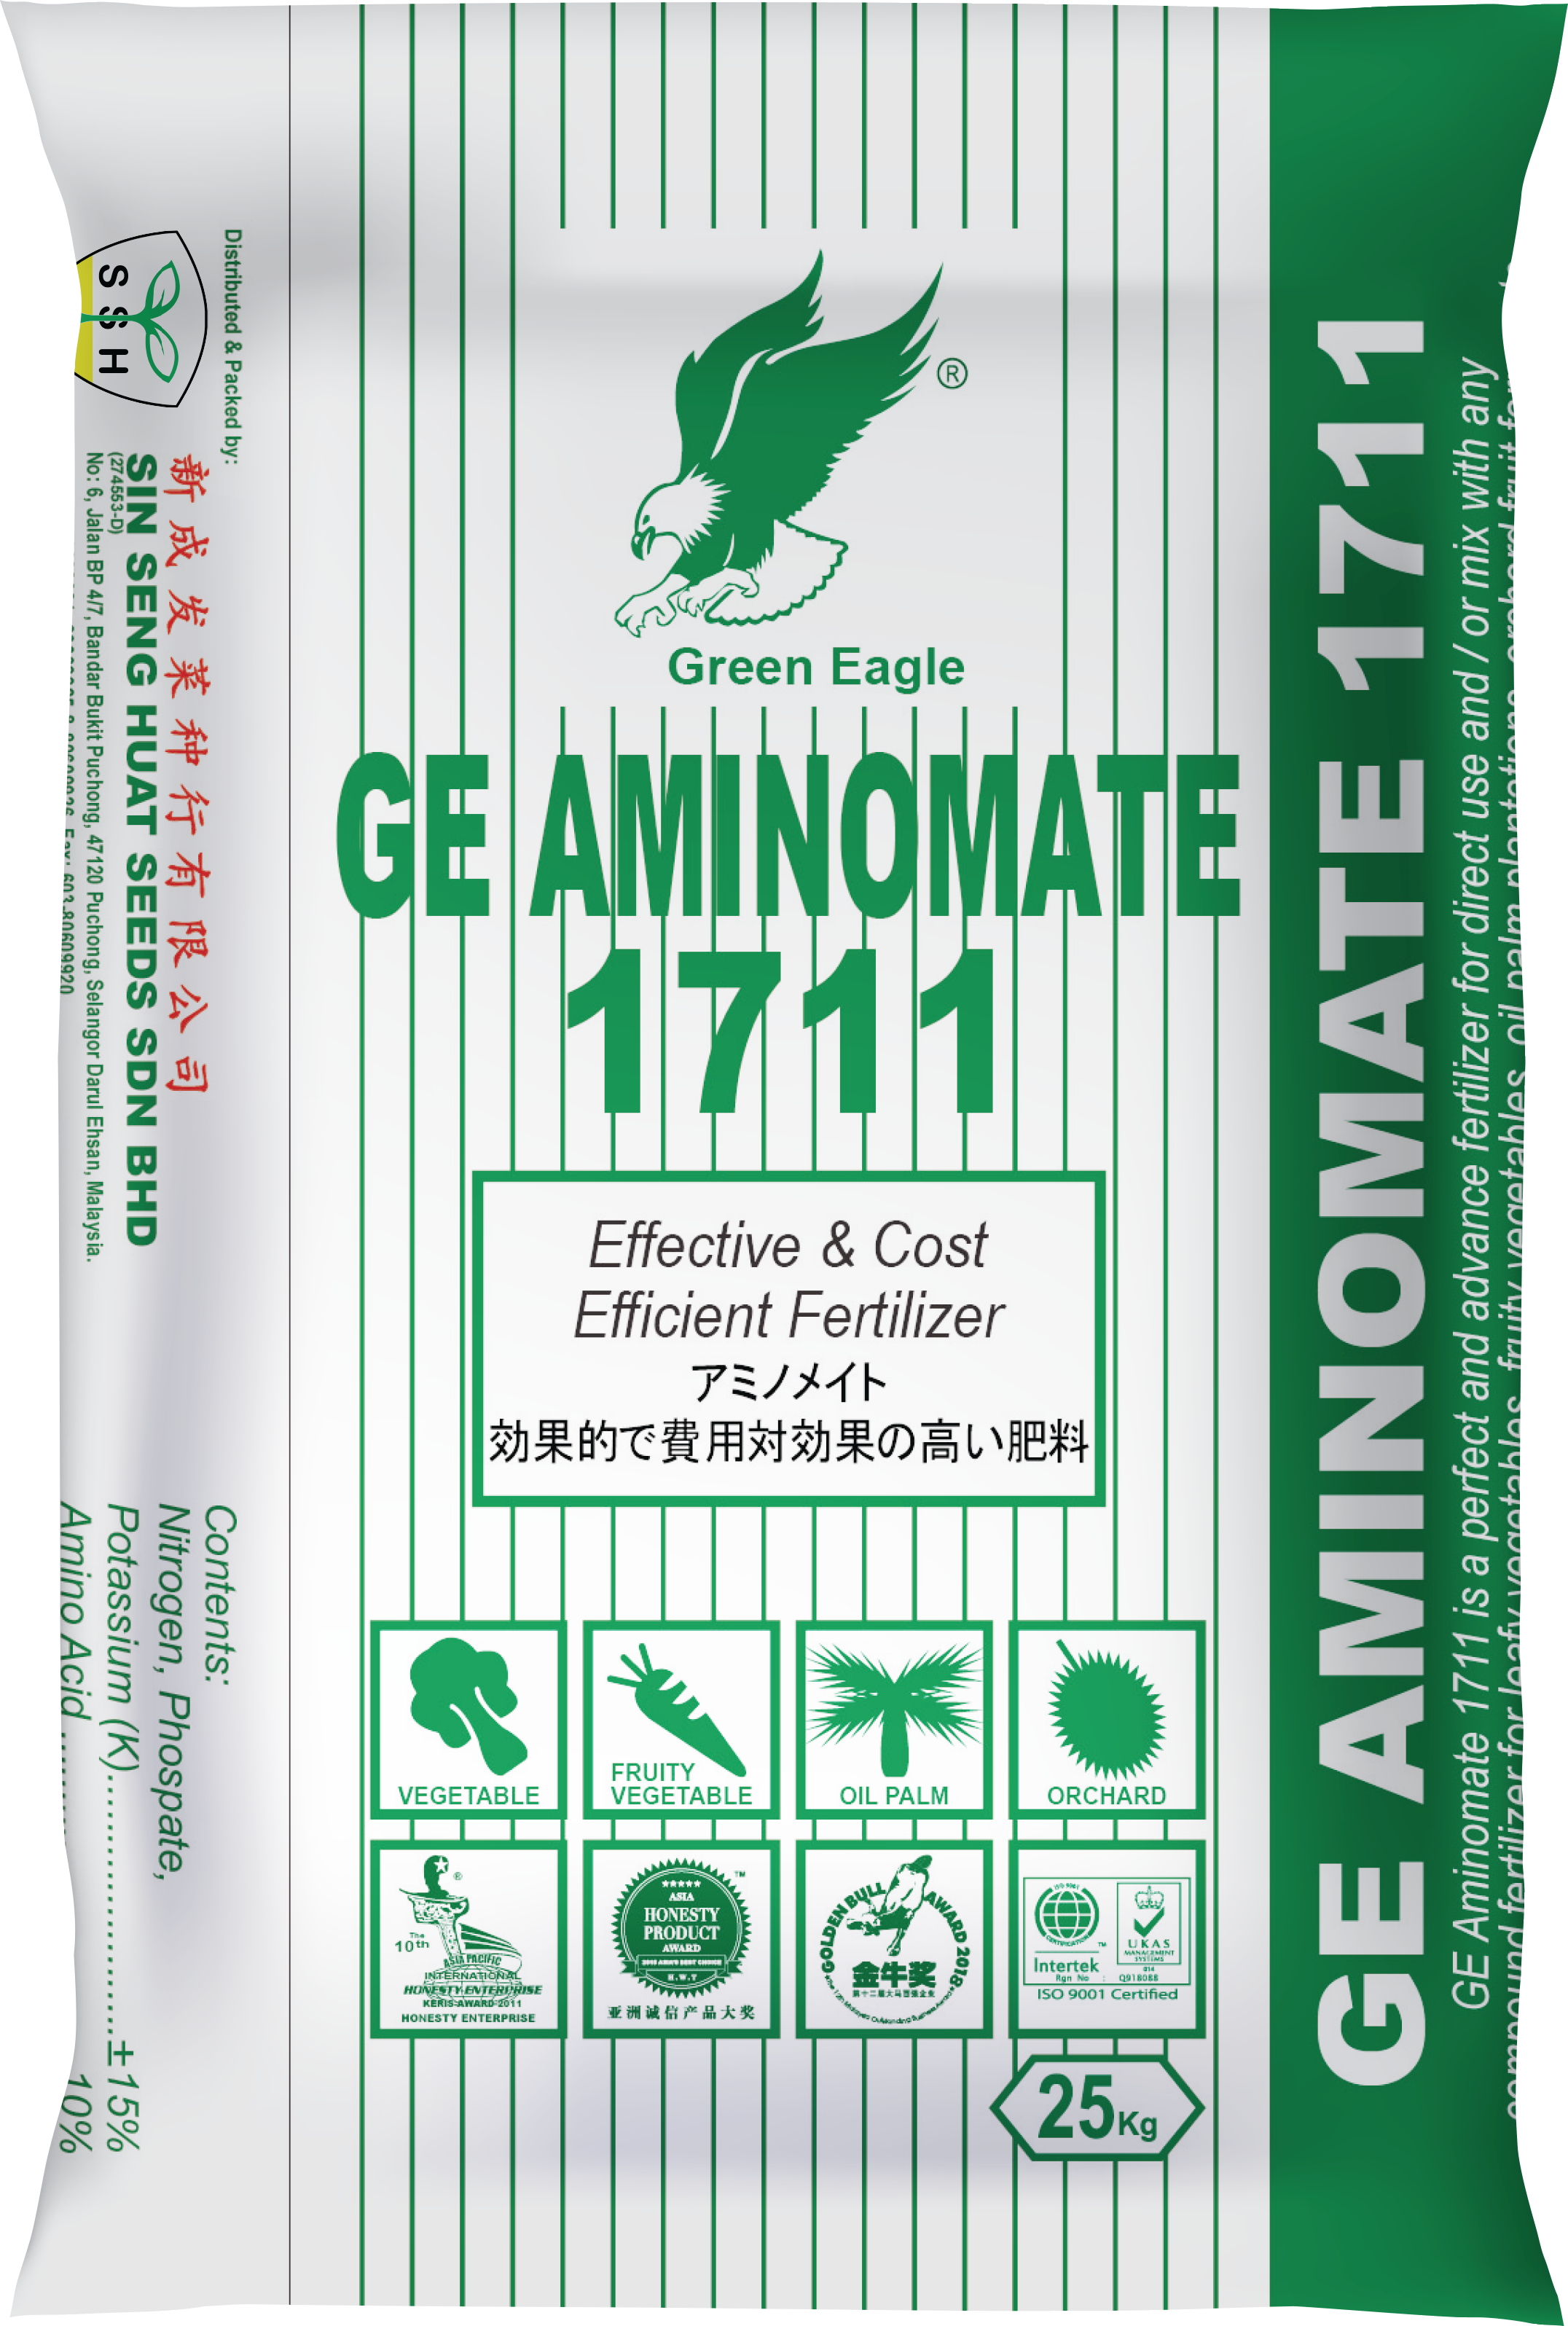 GE 1711 Aminomate bag design template (use this)